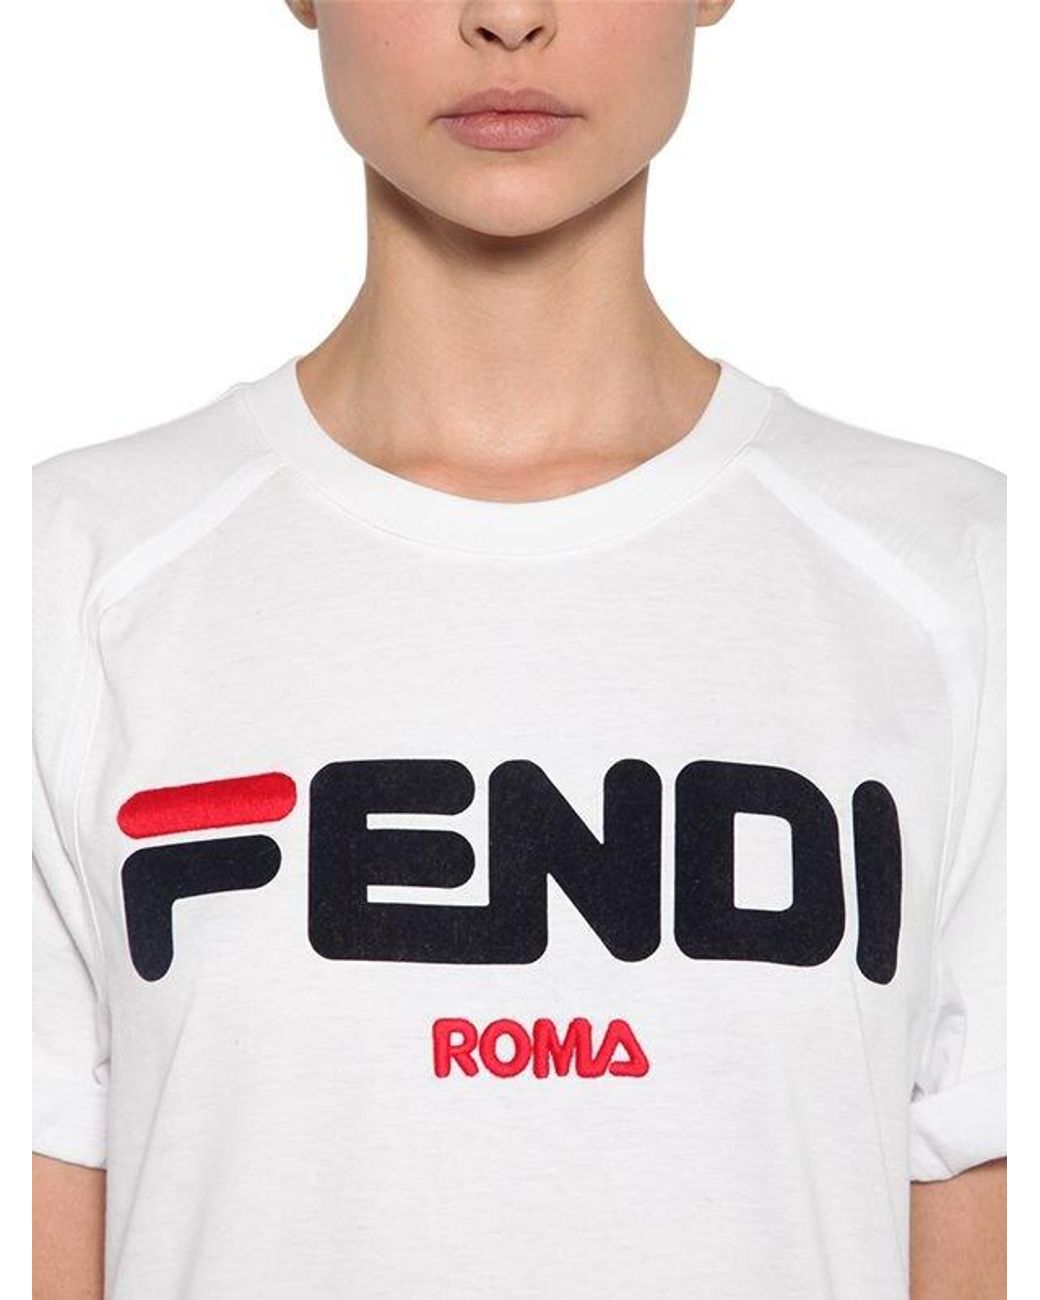 Fendi Mania Logo Printed Jersey T-shirt in White | Lyst